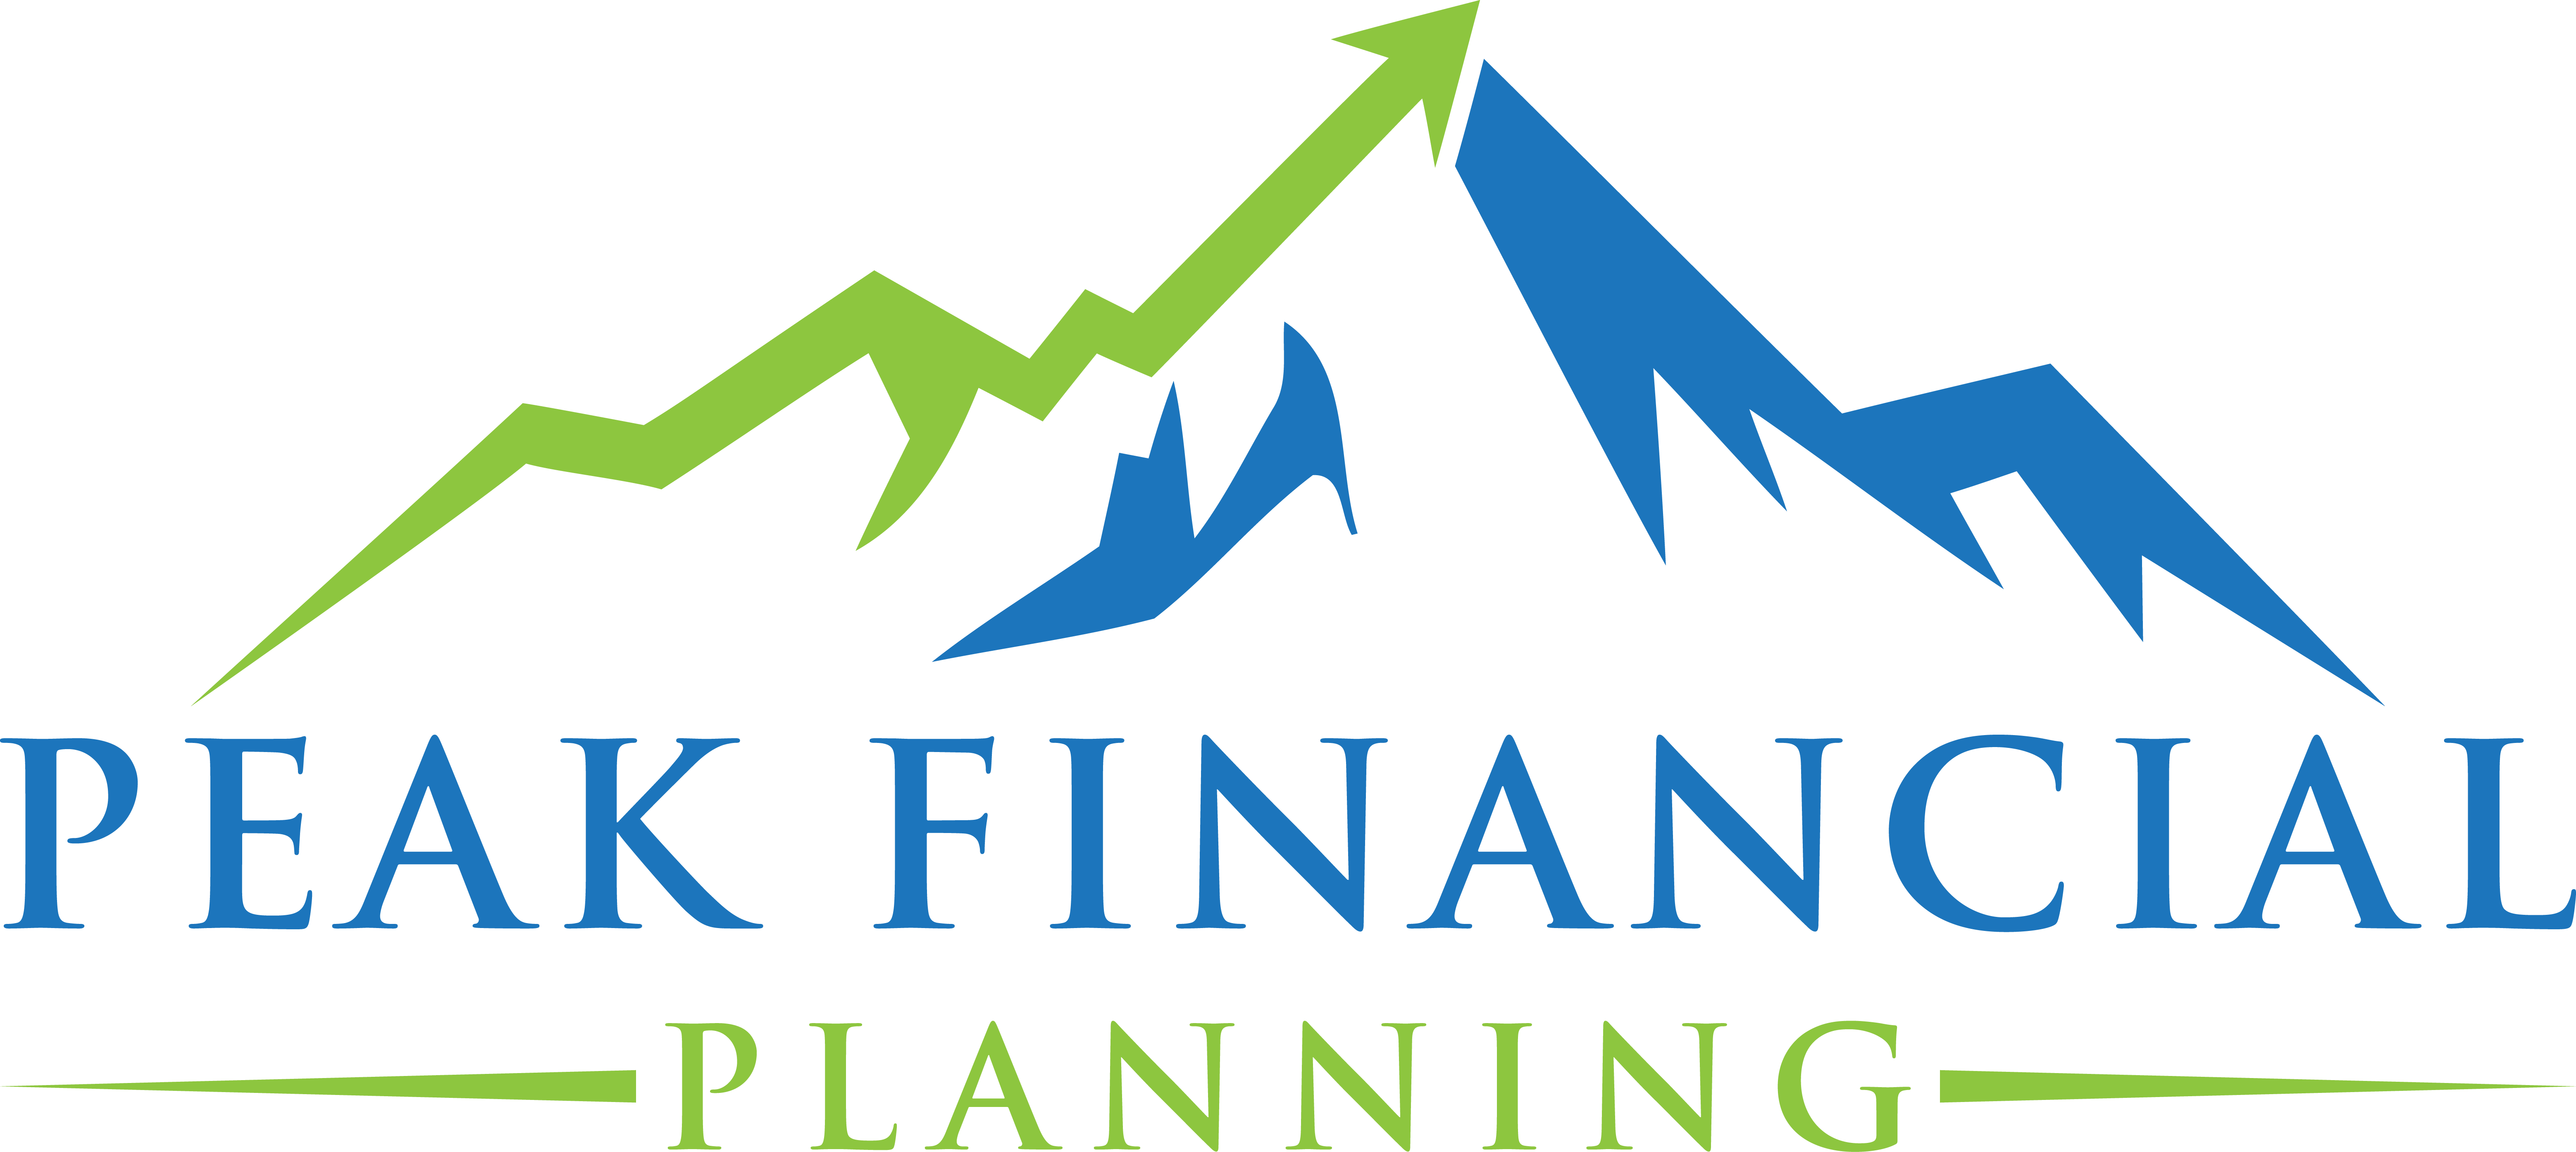 Peak Financial Planning